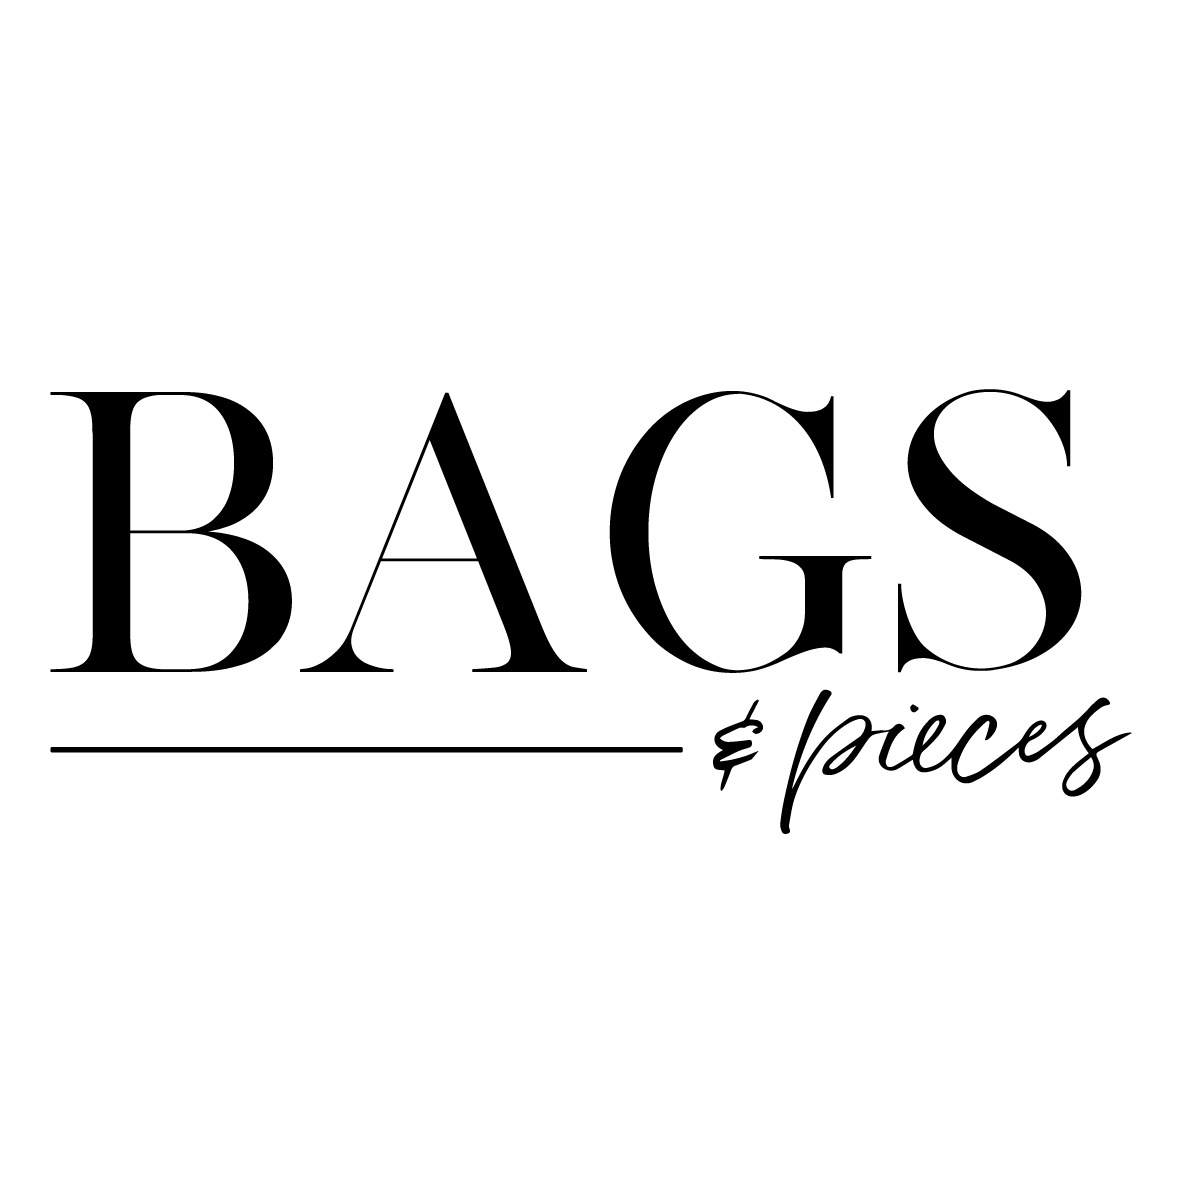 (c) Bagsandpieces.co